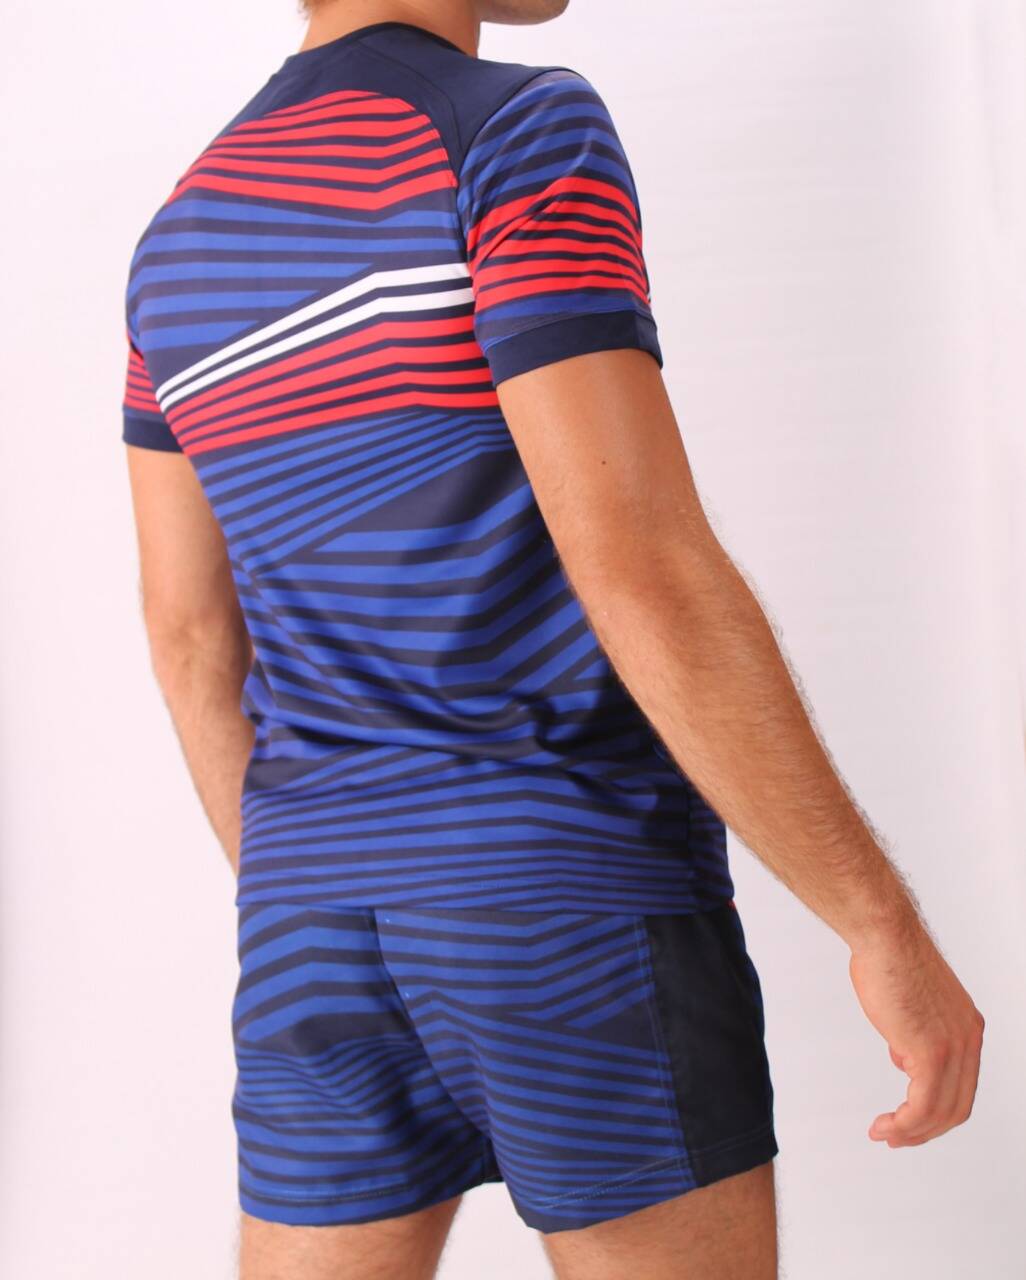 Imagen carrousel Camiseta Rugby France  1